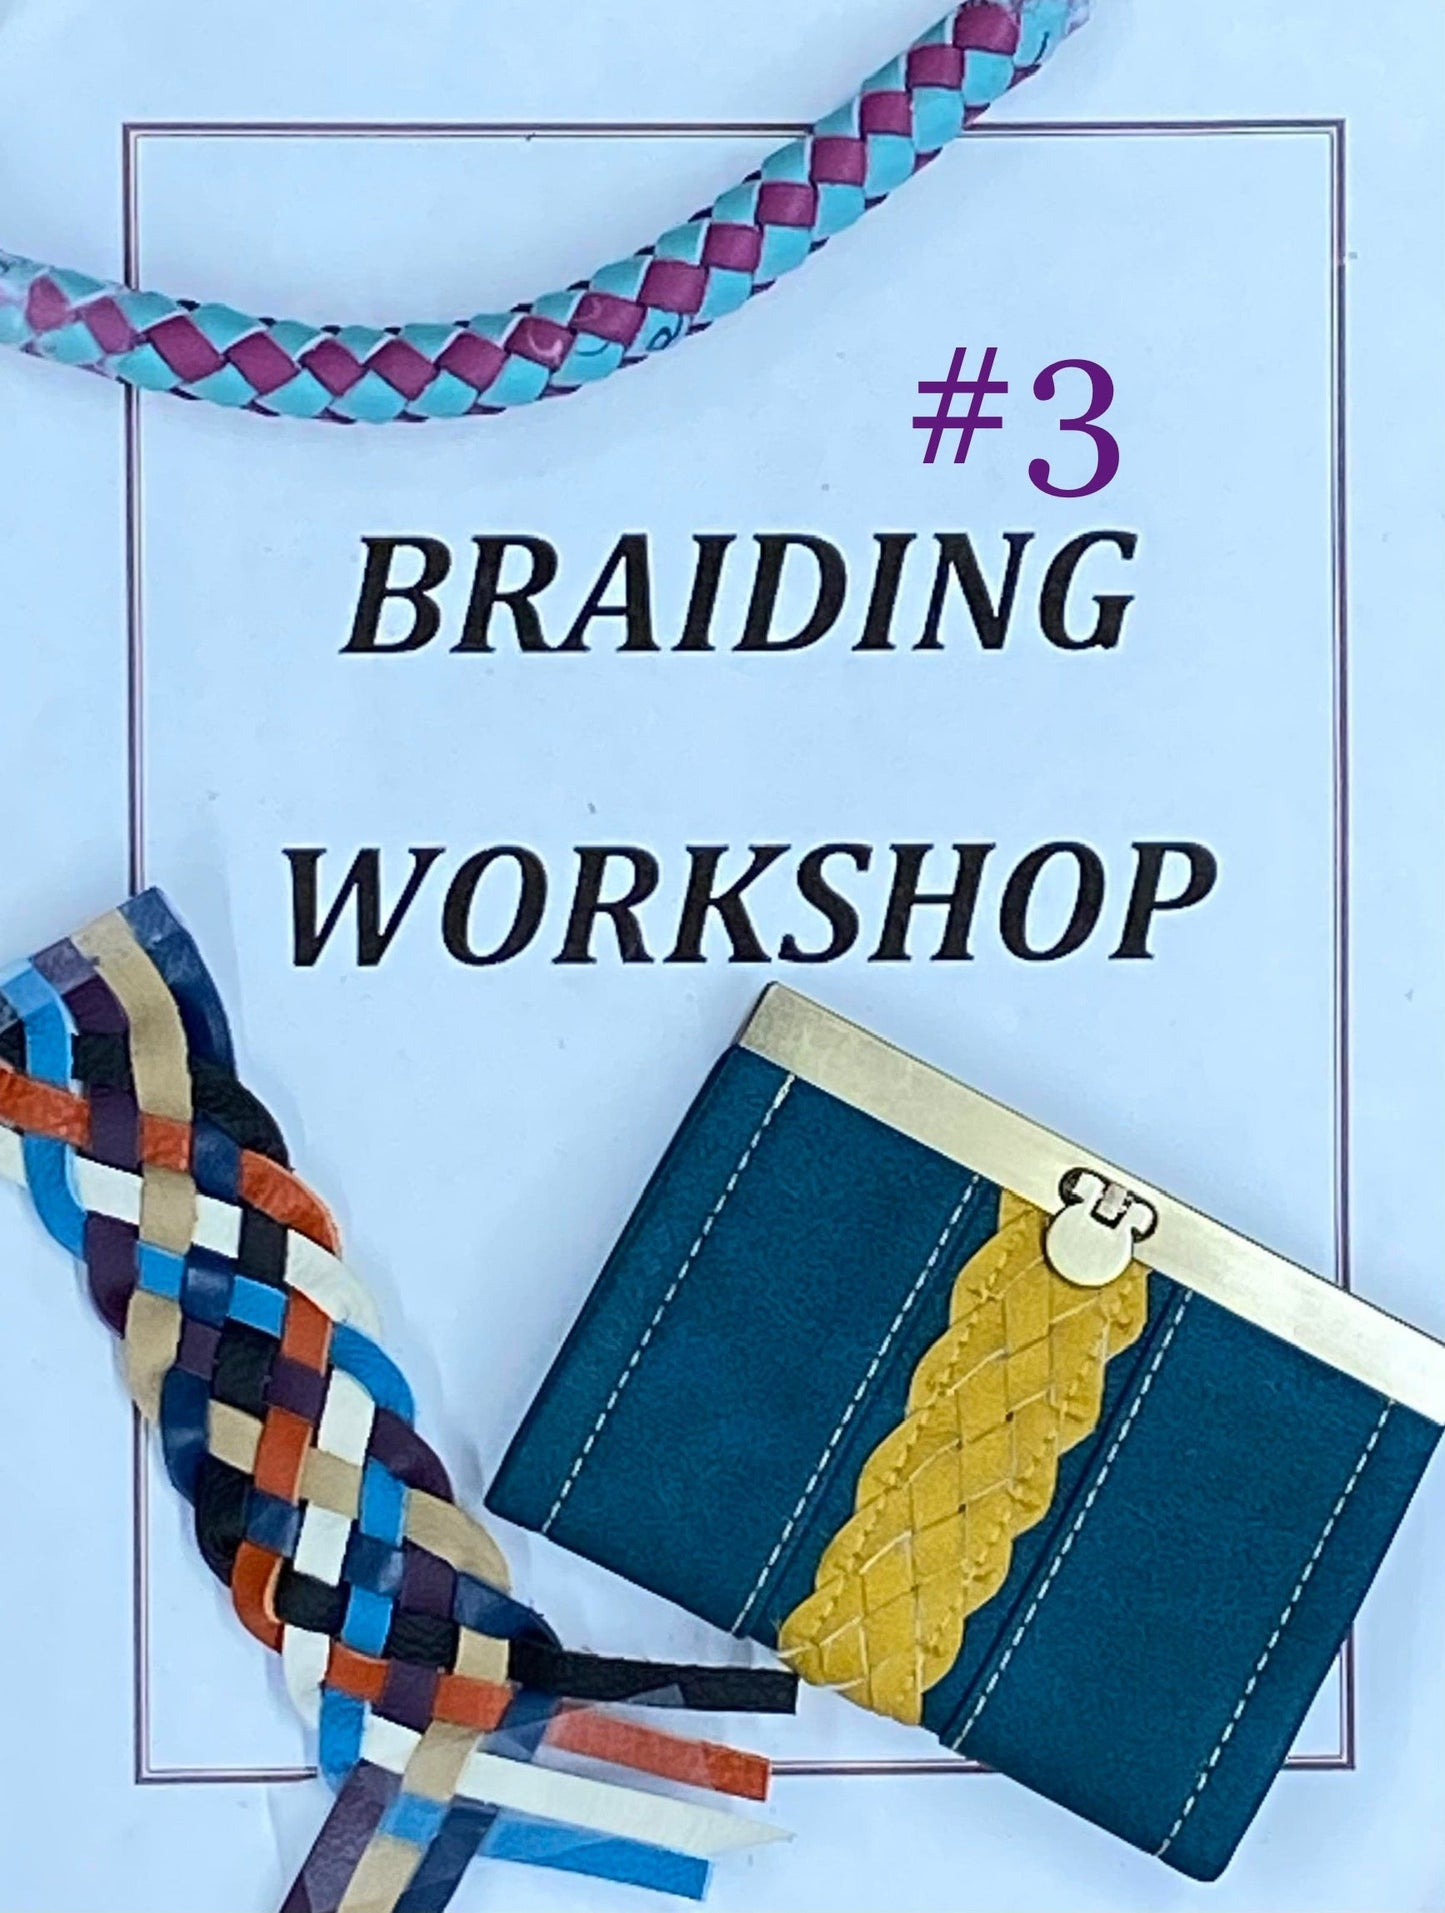 Braiding Workshop #3- Video 7, Session 4